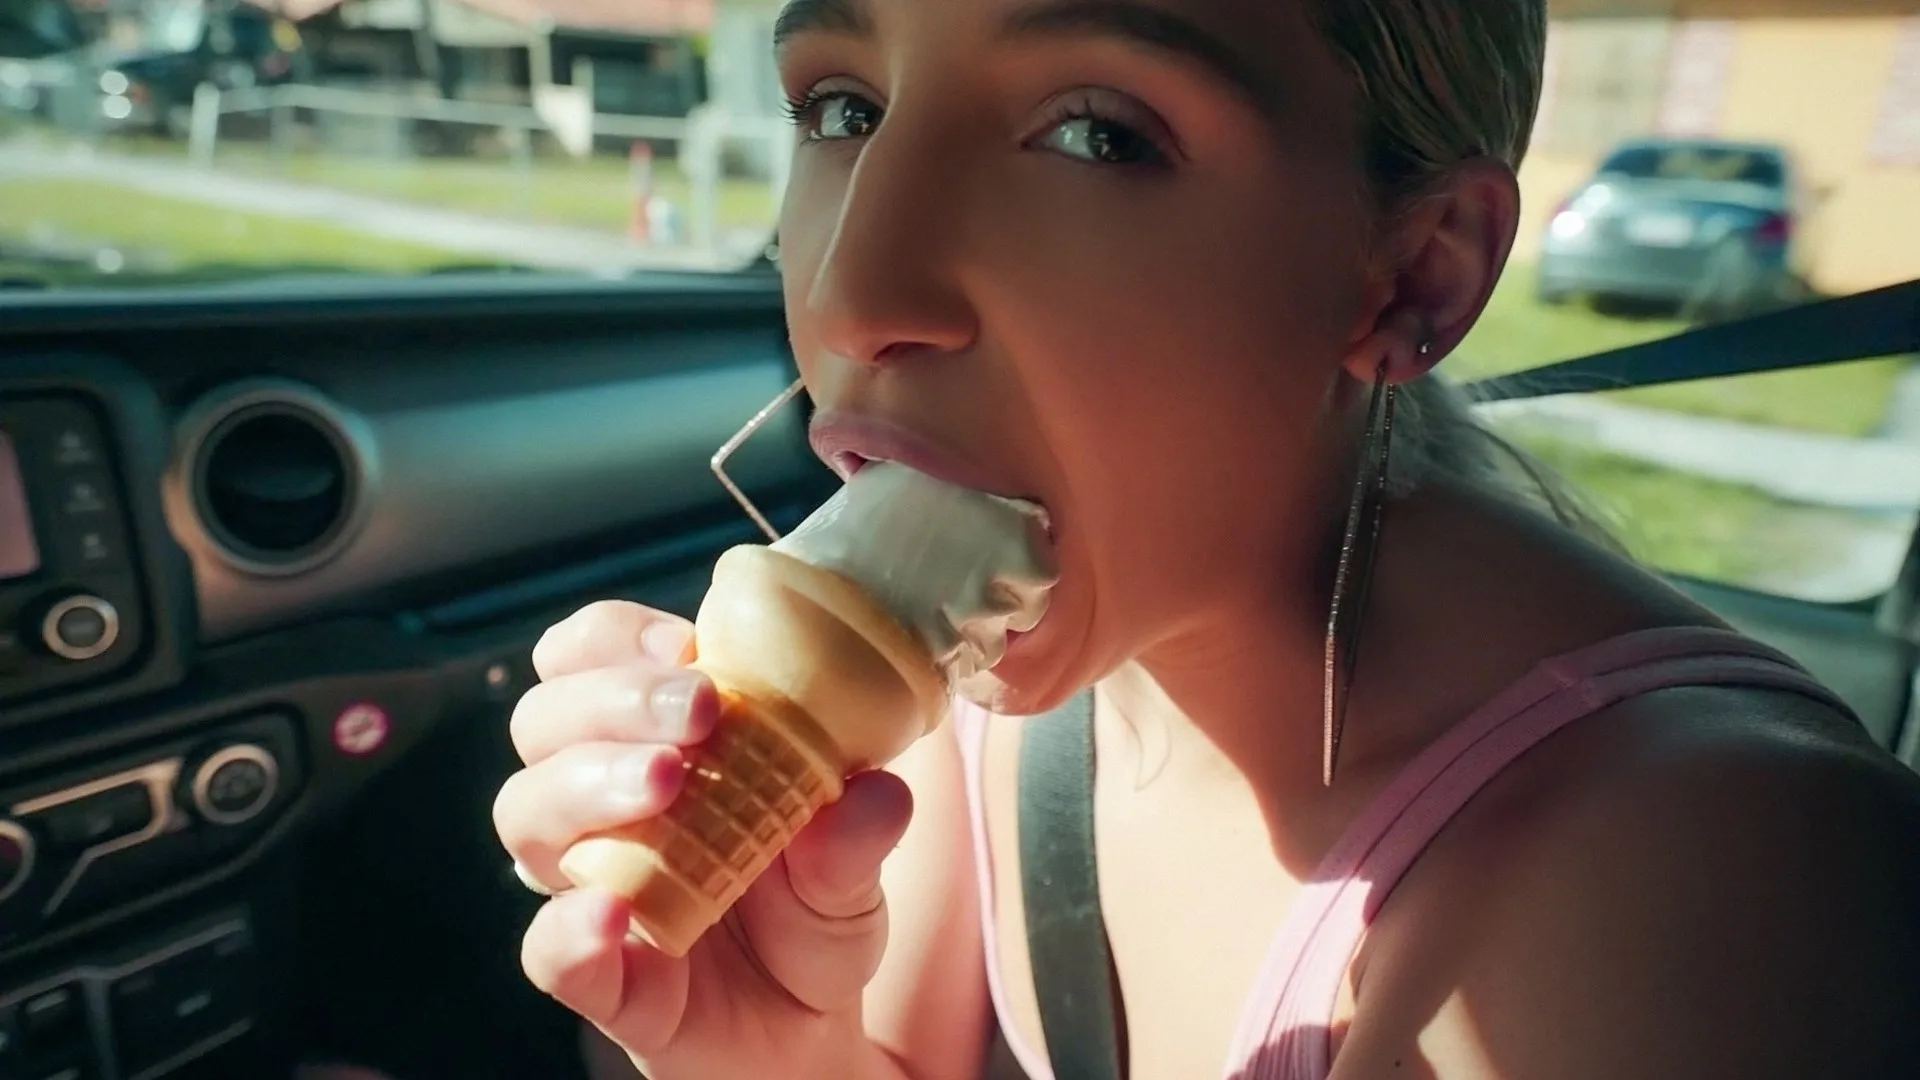 We All Scream For Ice Cream - Stranded Teens